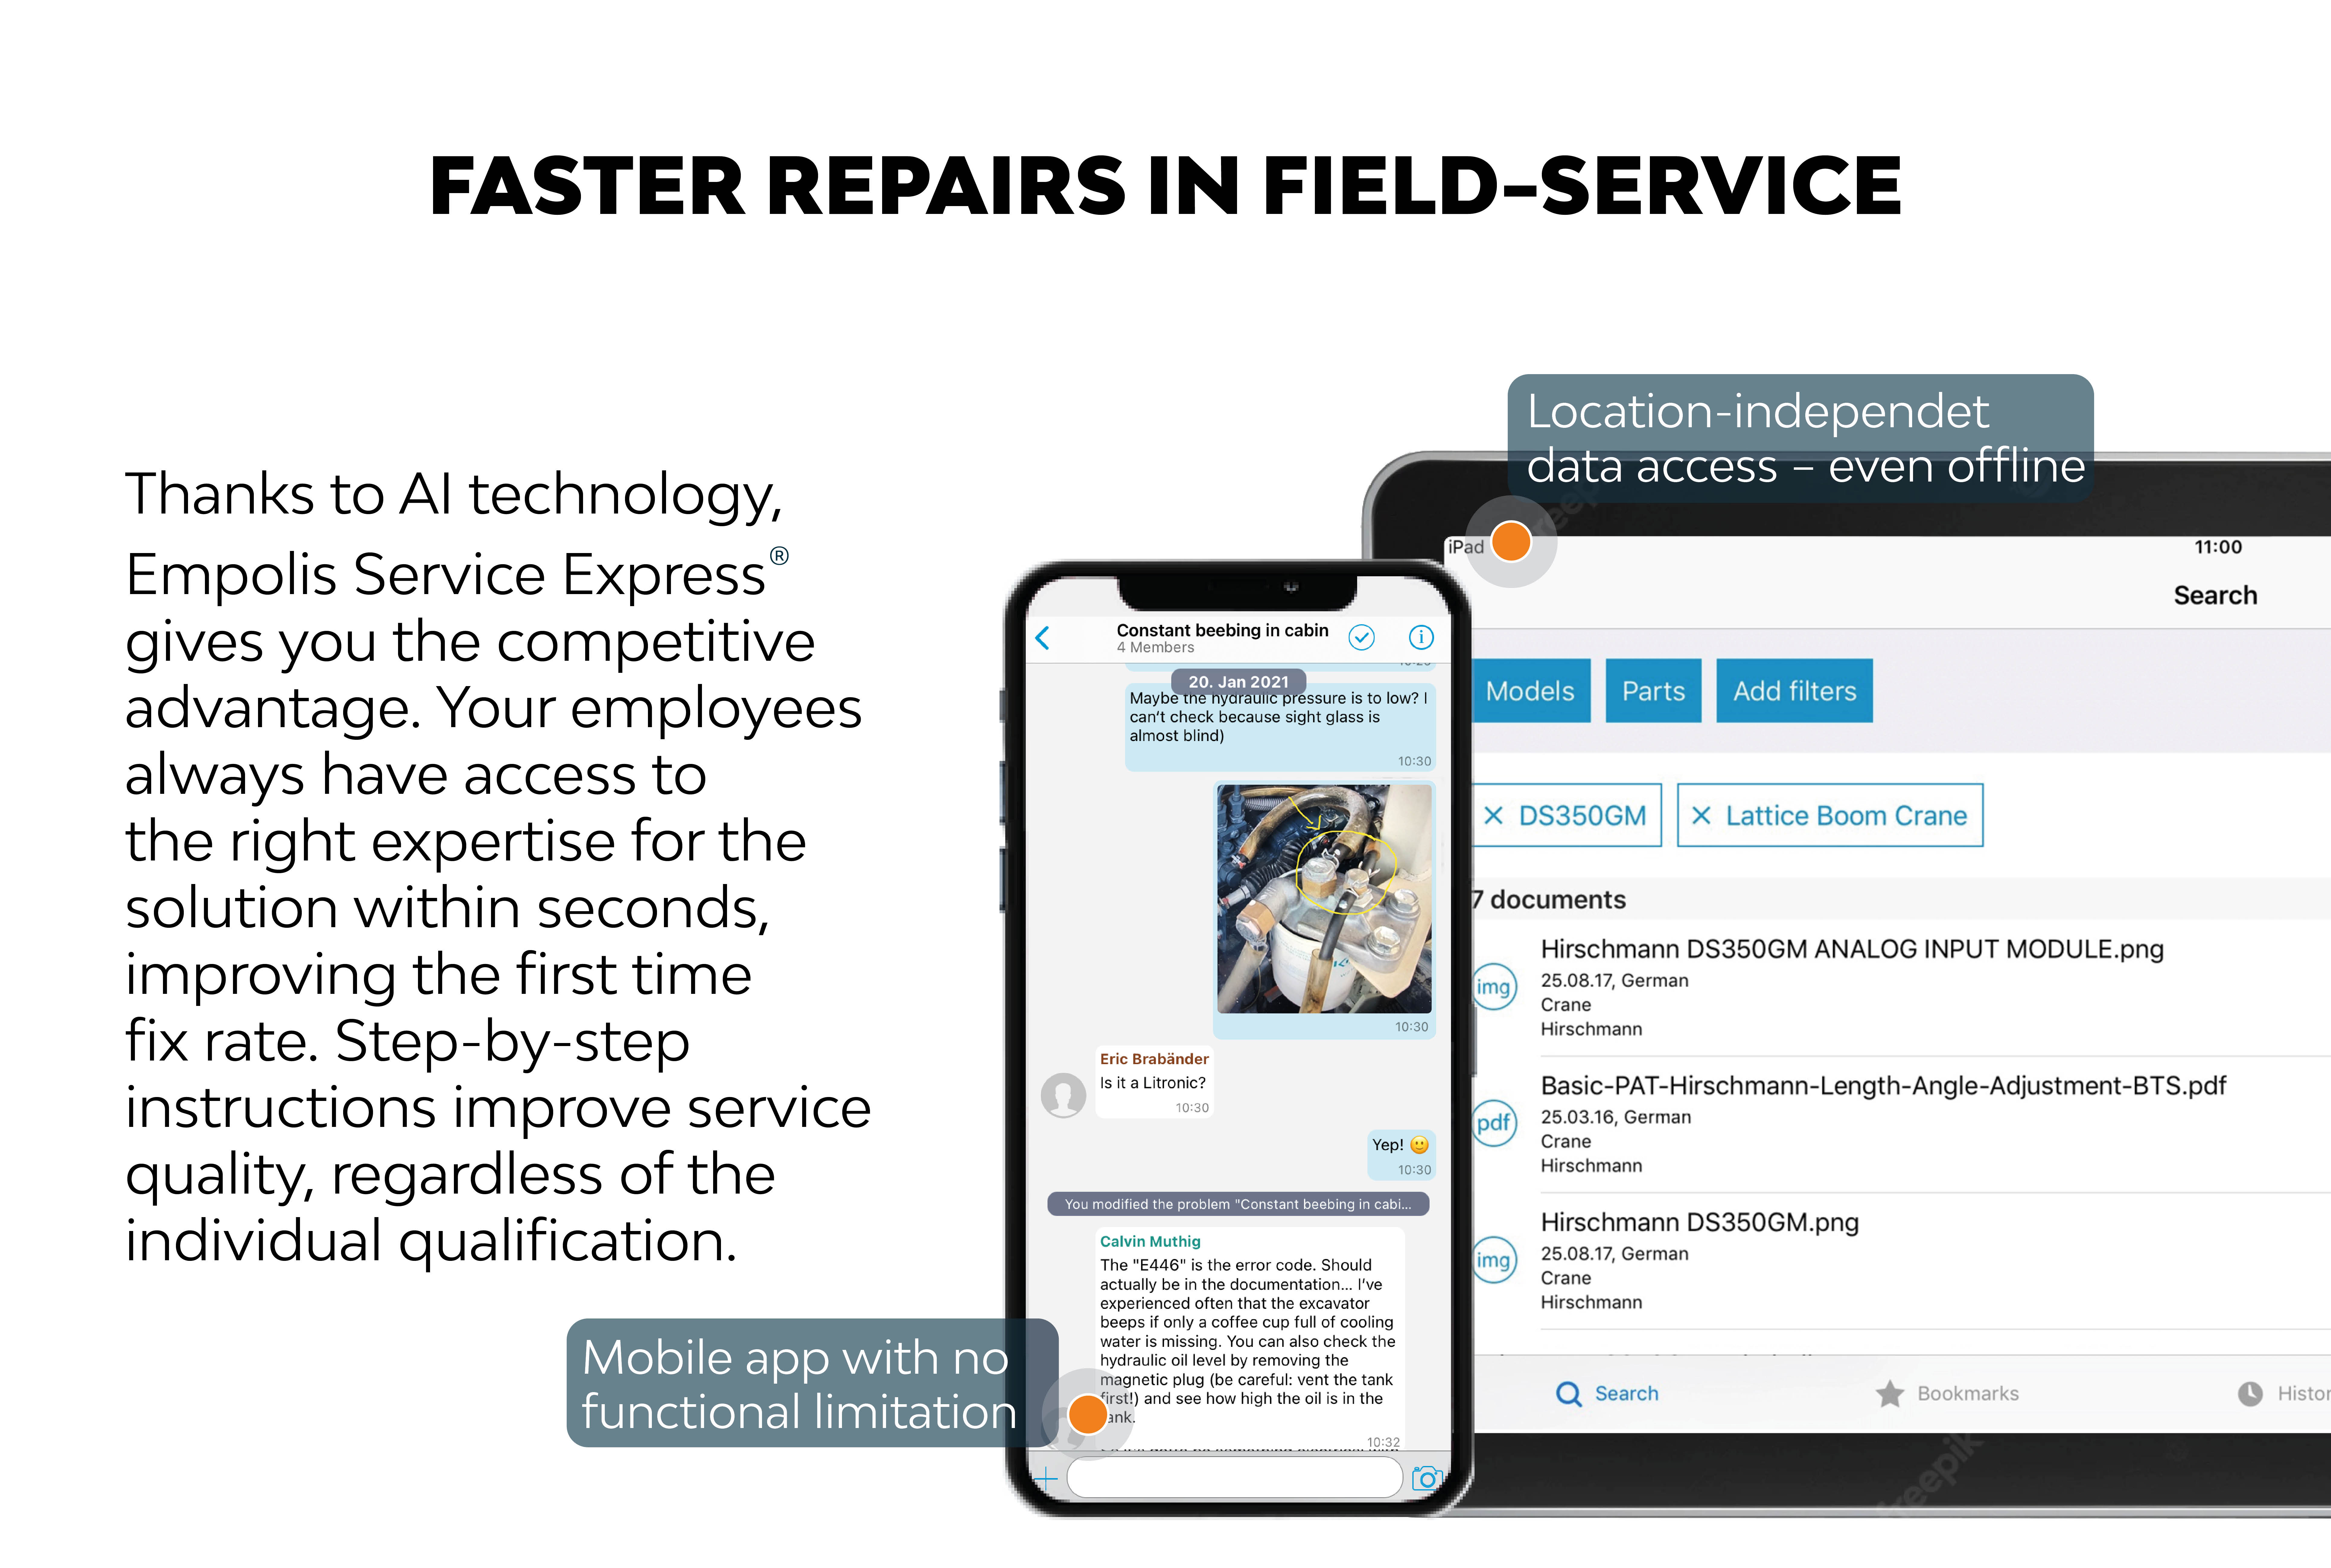 Faster repairs in field service